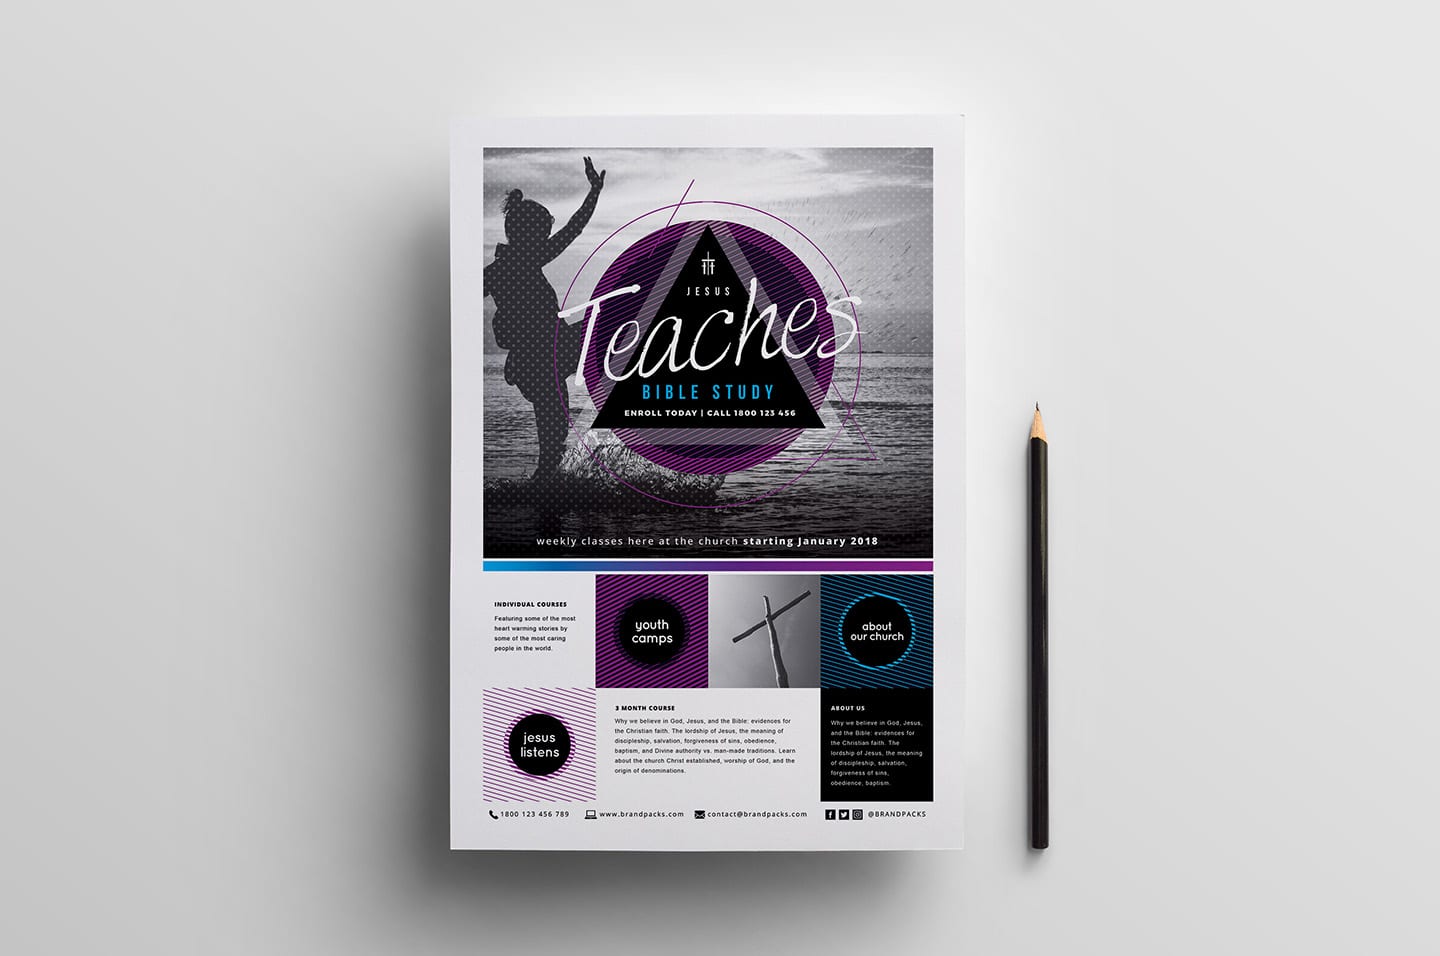 Free Church Templates - Photoshop PSD & Illustrator Ai - BrandPacks In Bible Study Flyer Template Free